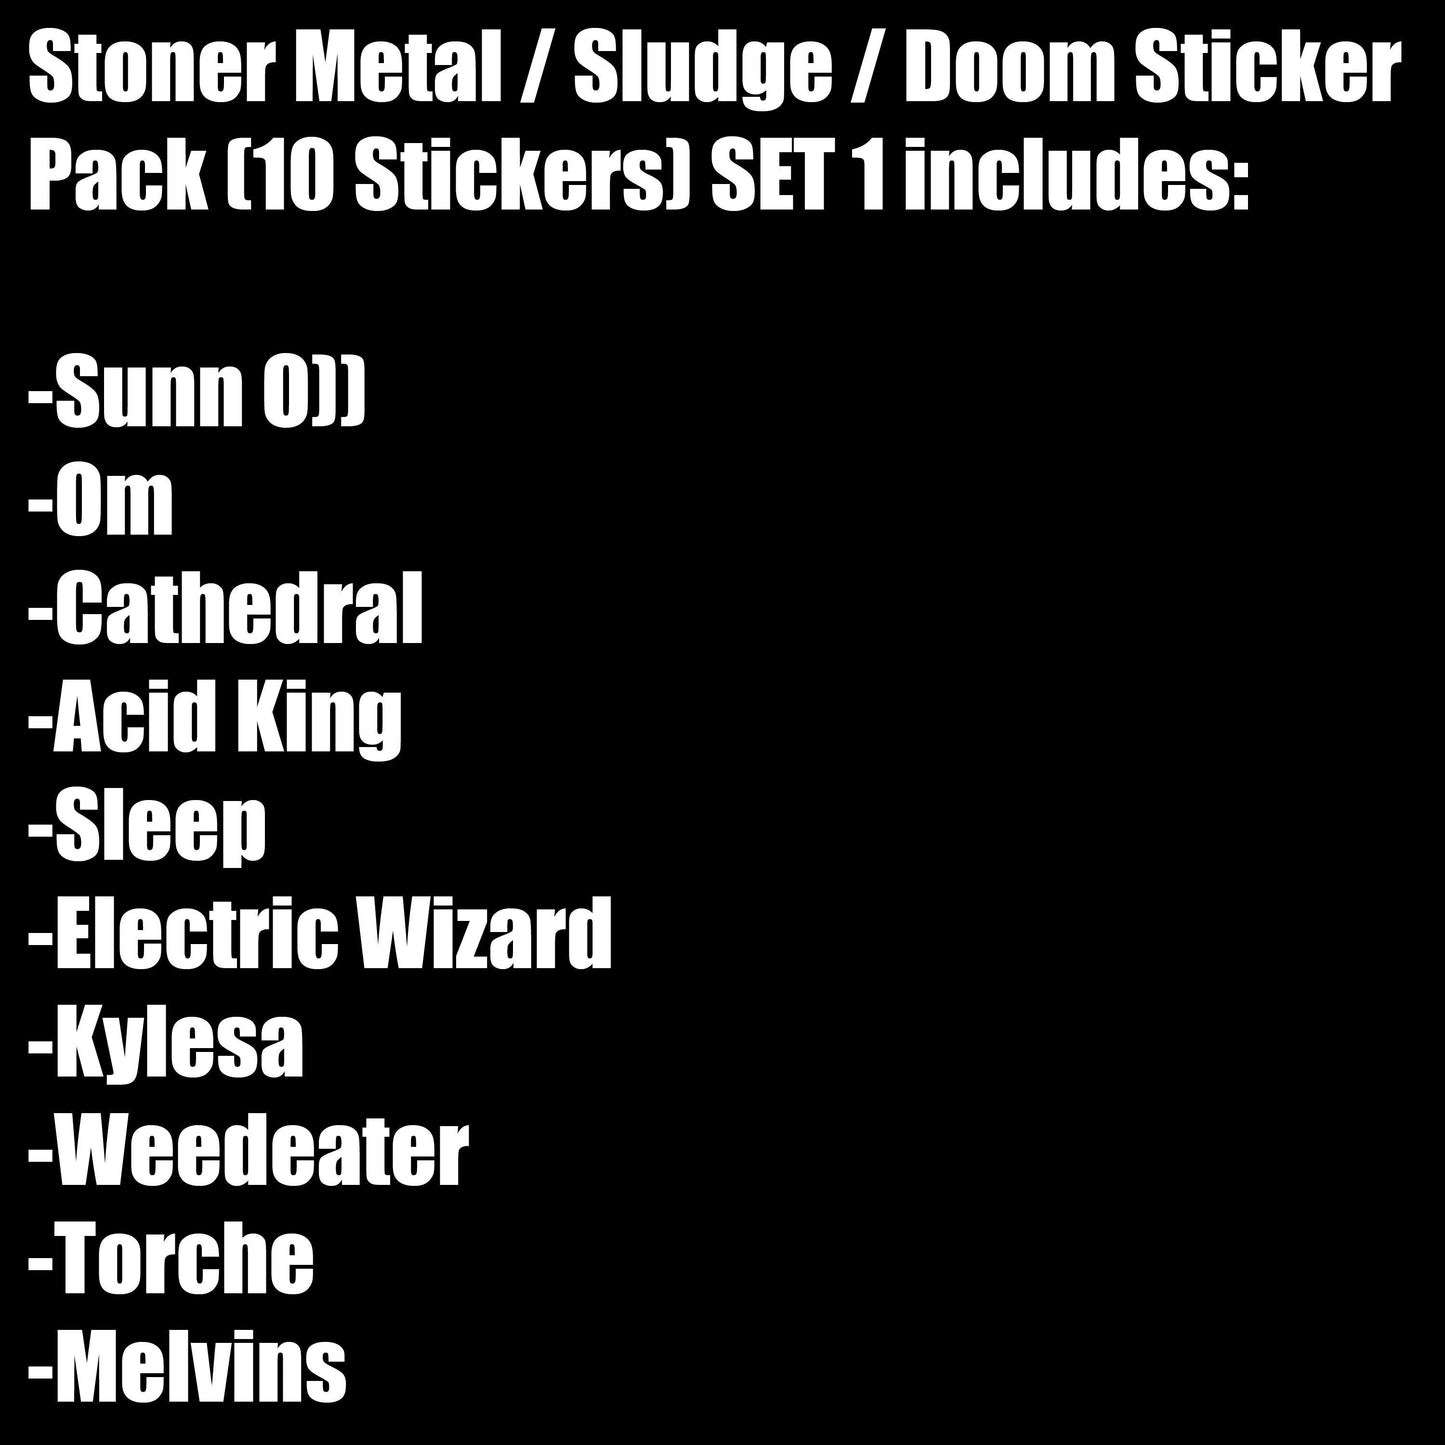 Stoner Metal / Sludge / Doom Sticker Pack (10 Stickers) SET 1